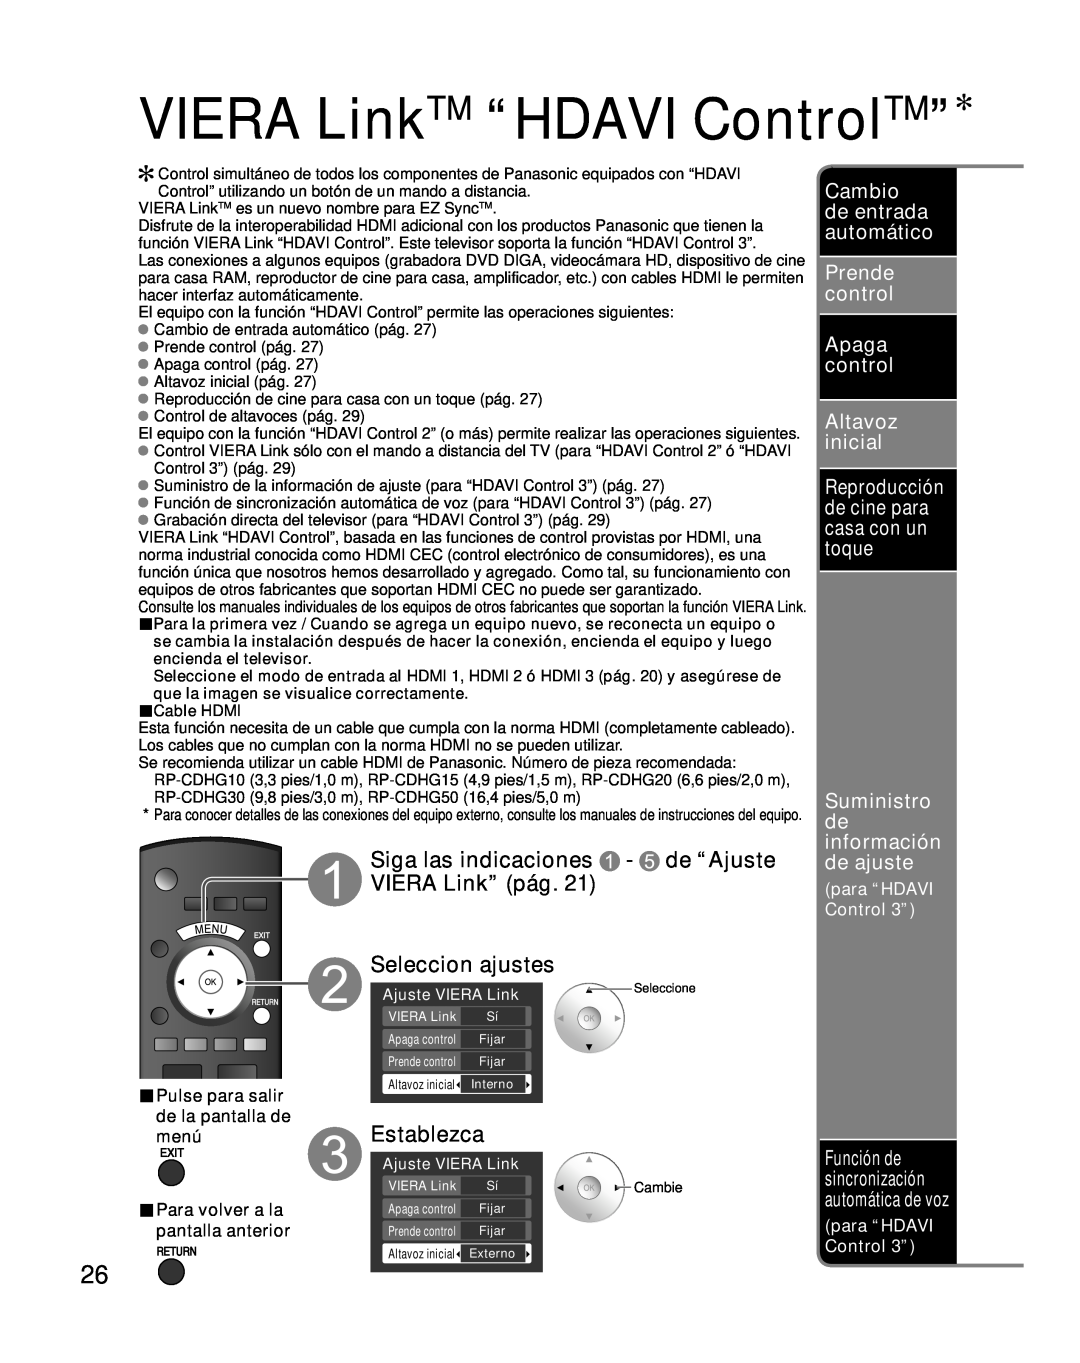 Panasonic TC-26LX85 VIERA LinkTM “HDAVI ControlTM”, Siga las indicaciones - de “Ajuste VIERA Link” pág, Seleccion ajustes 